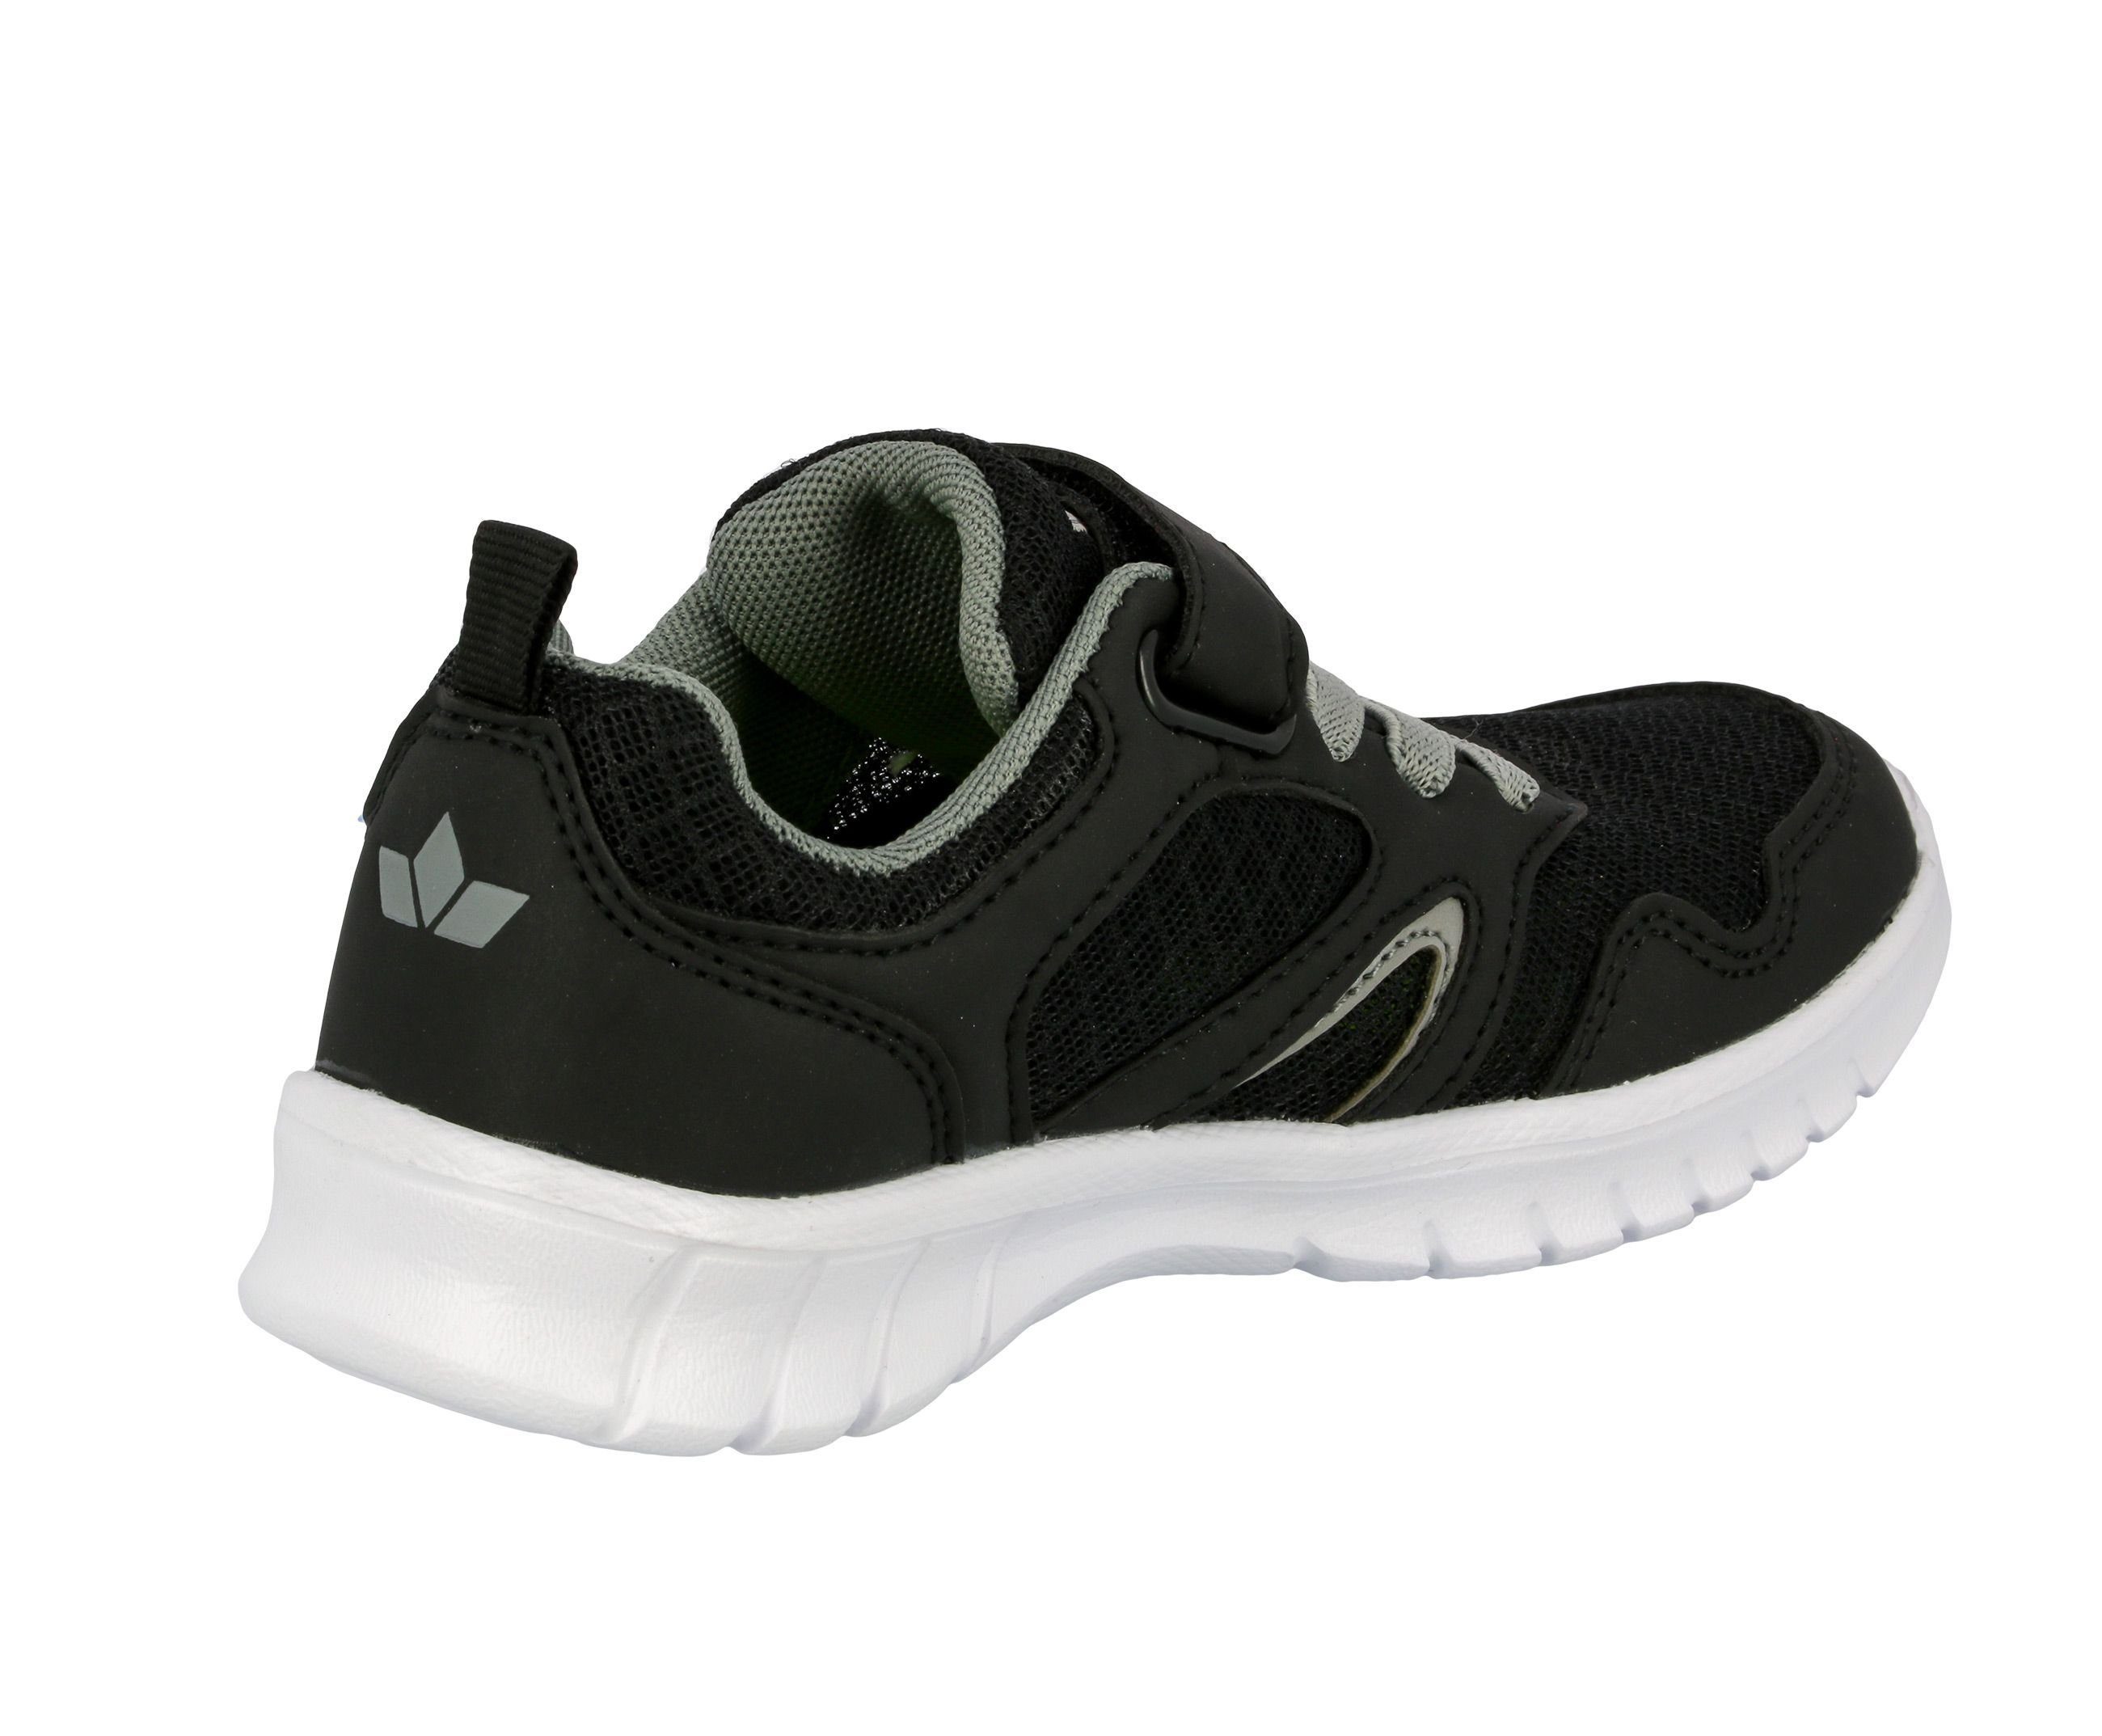 Skip schwarz/grau VS Lico Freizeitschuh Sneaker